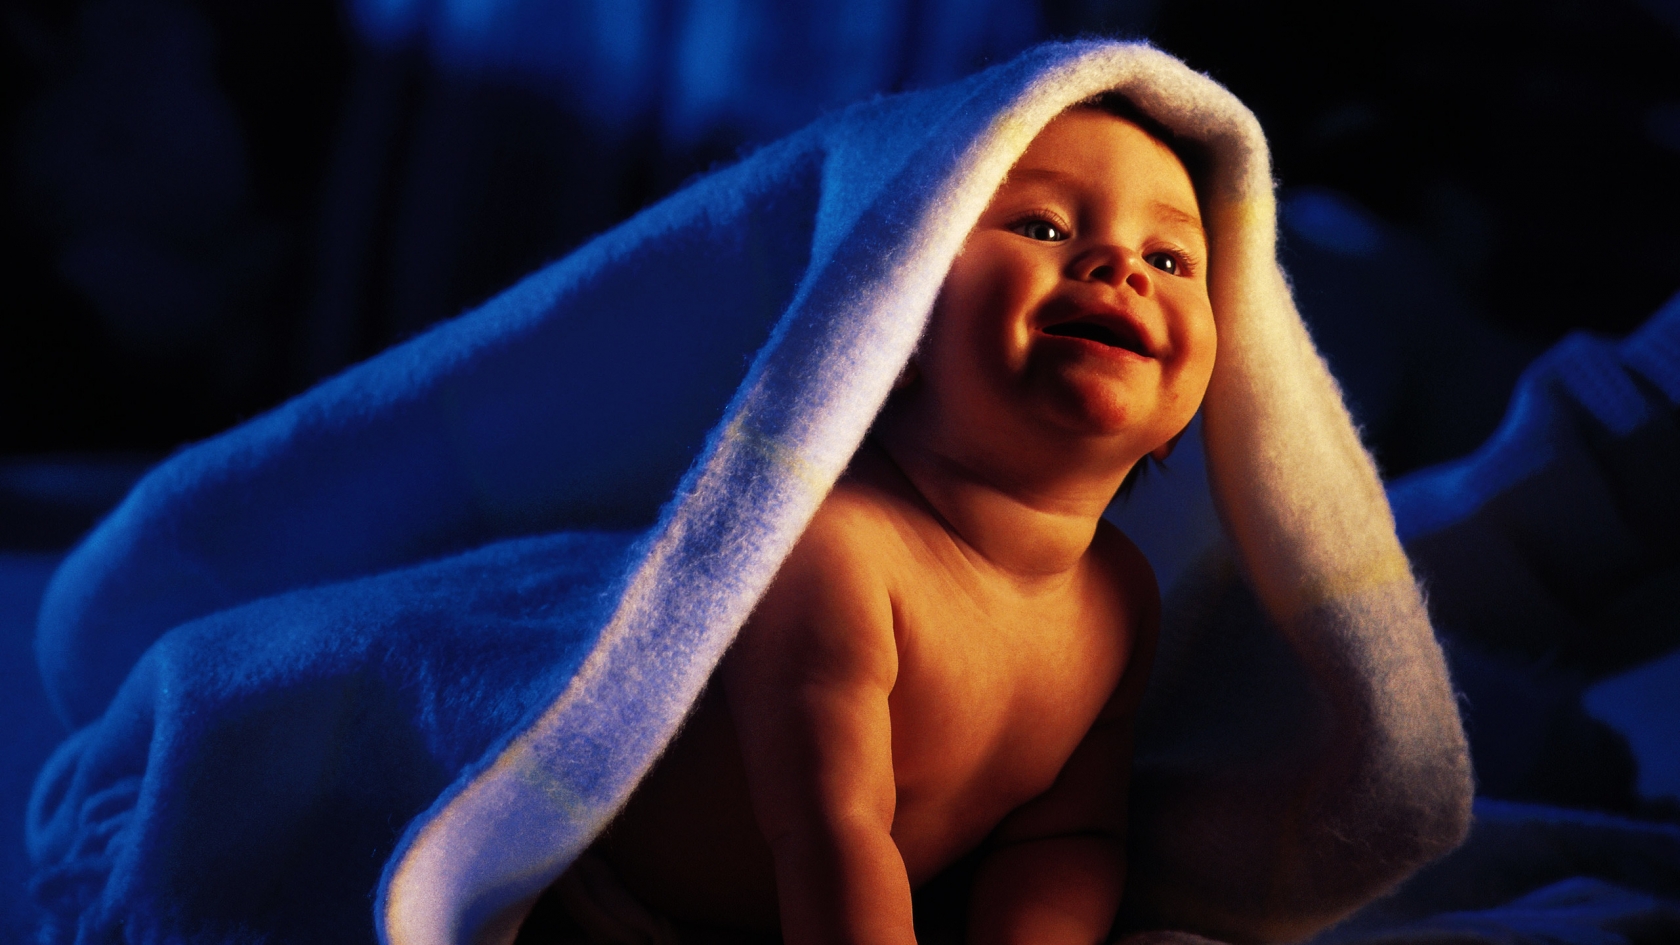 Baby Boy for 1680 x 945 HDTV resolution